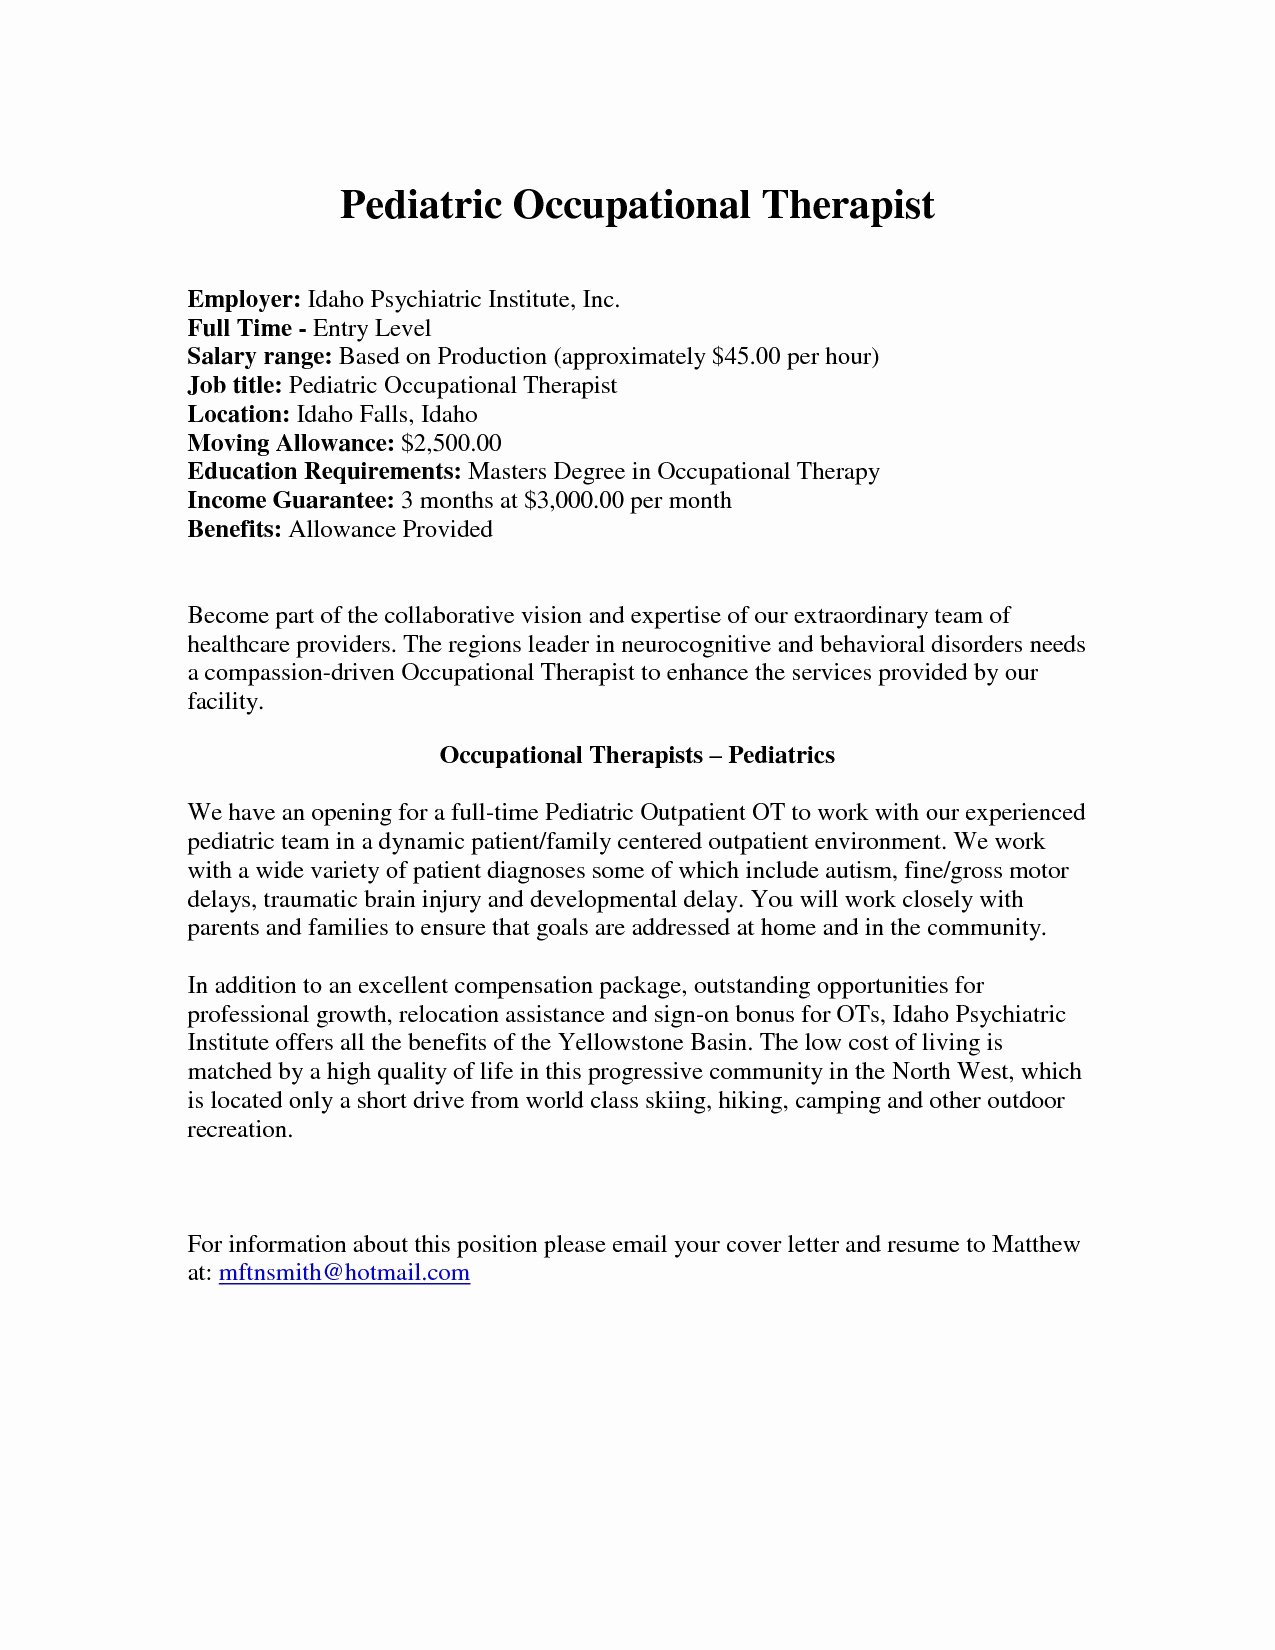 Therapist Marketing Letter Template Elegant Resume and Template Physical therapist Resume Sample